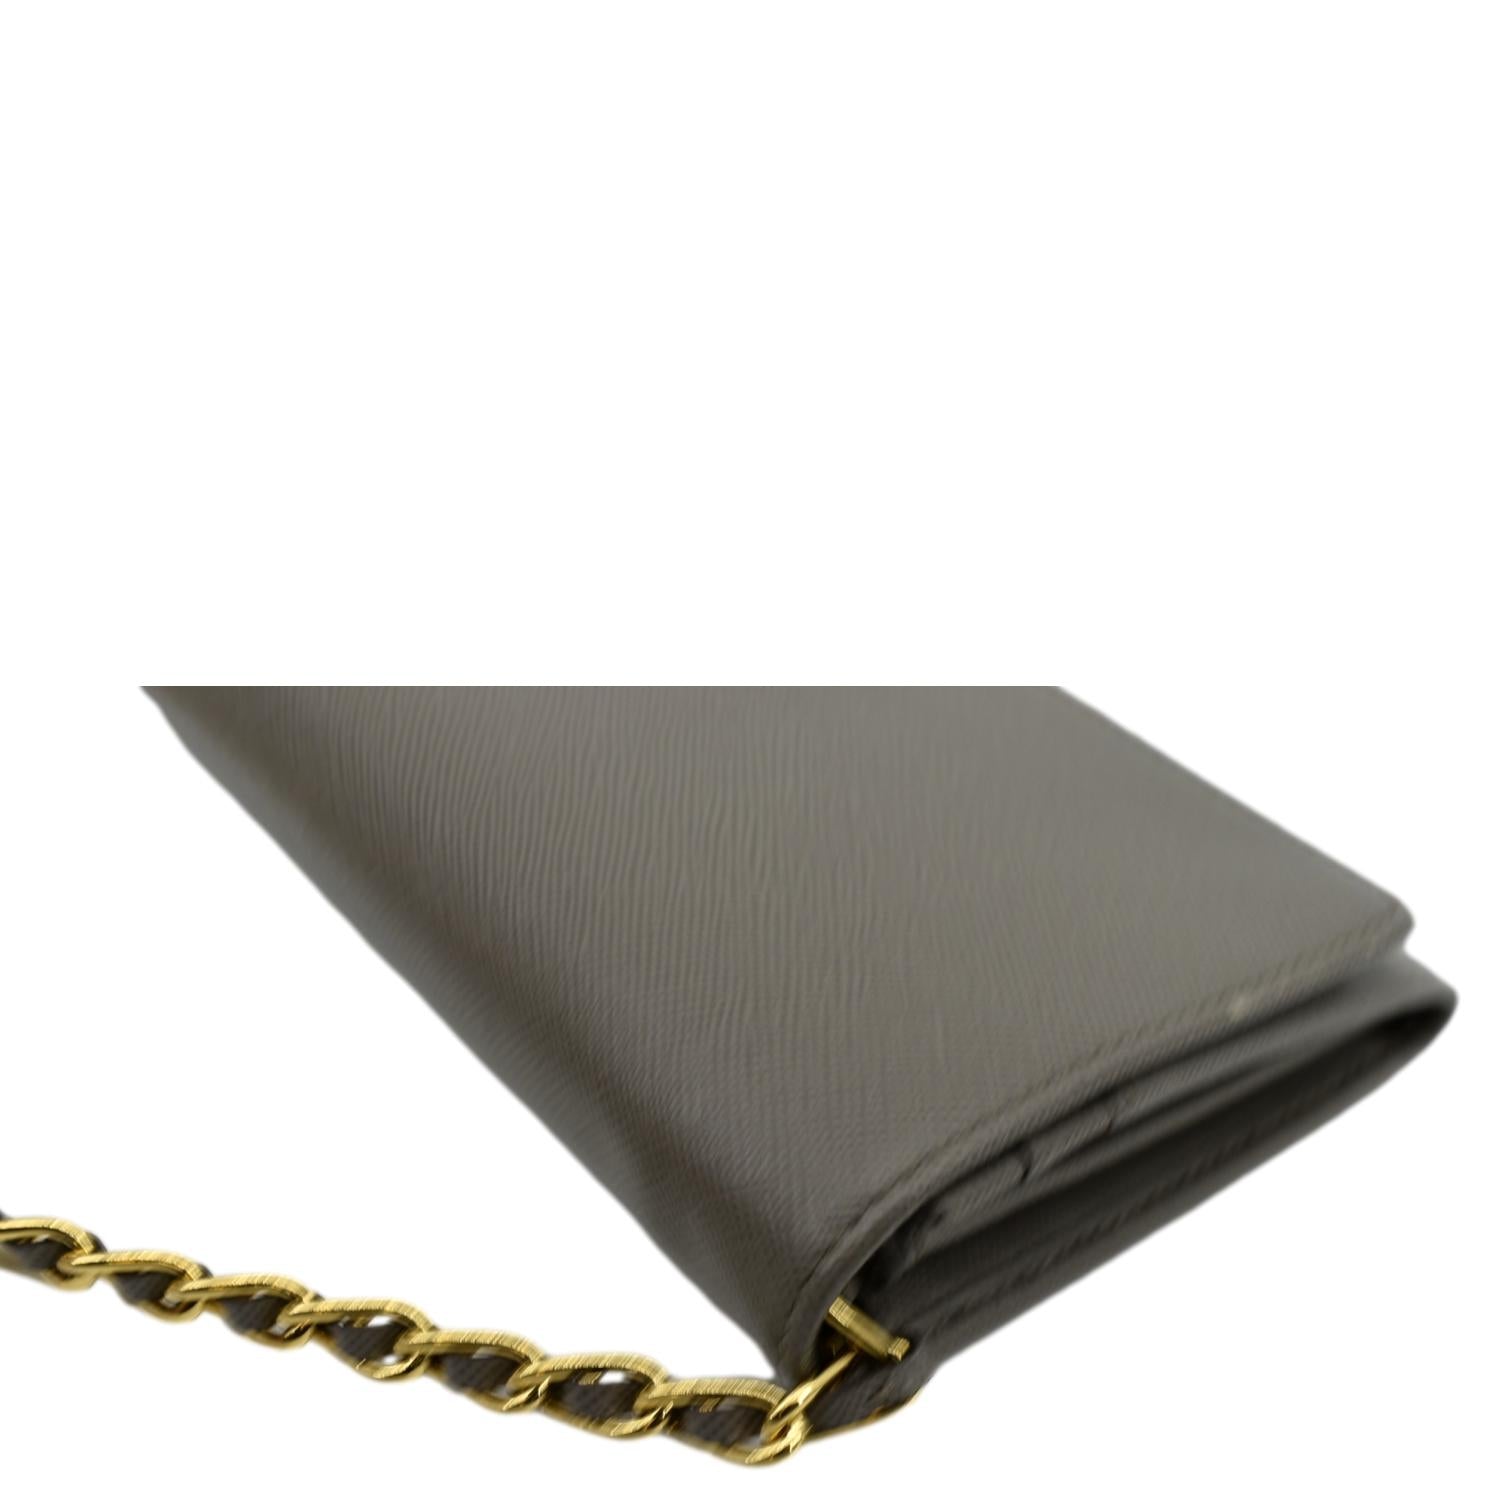 Prada Beige Saffiano Metal Leather Wallet on Chain Prada